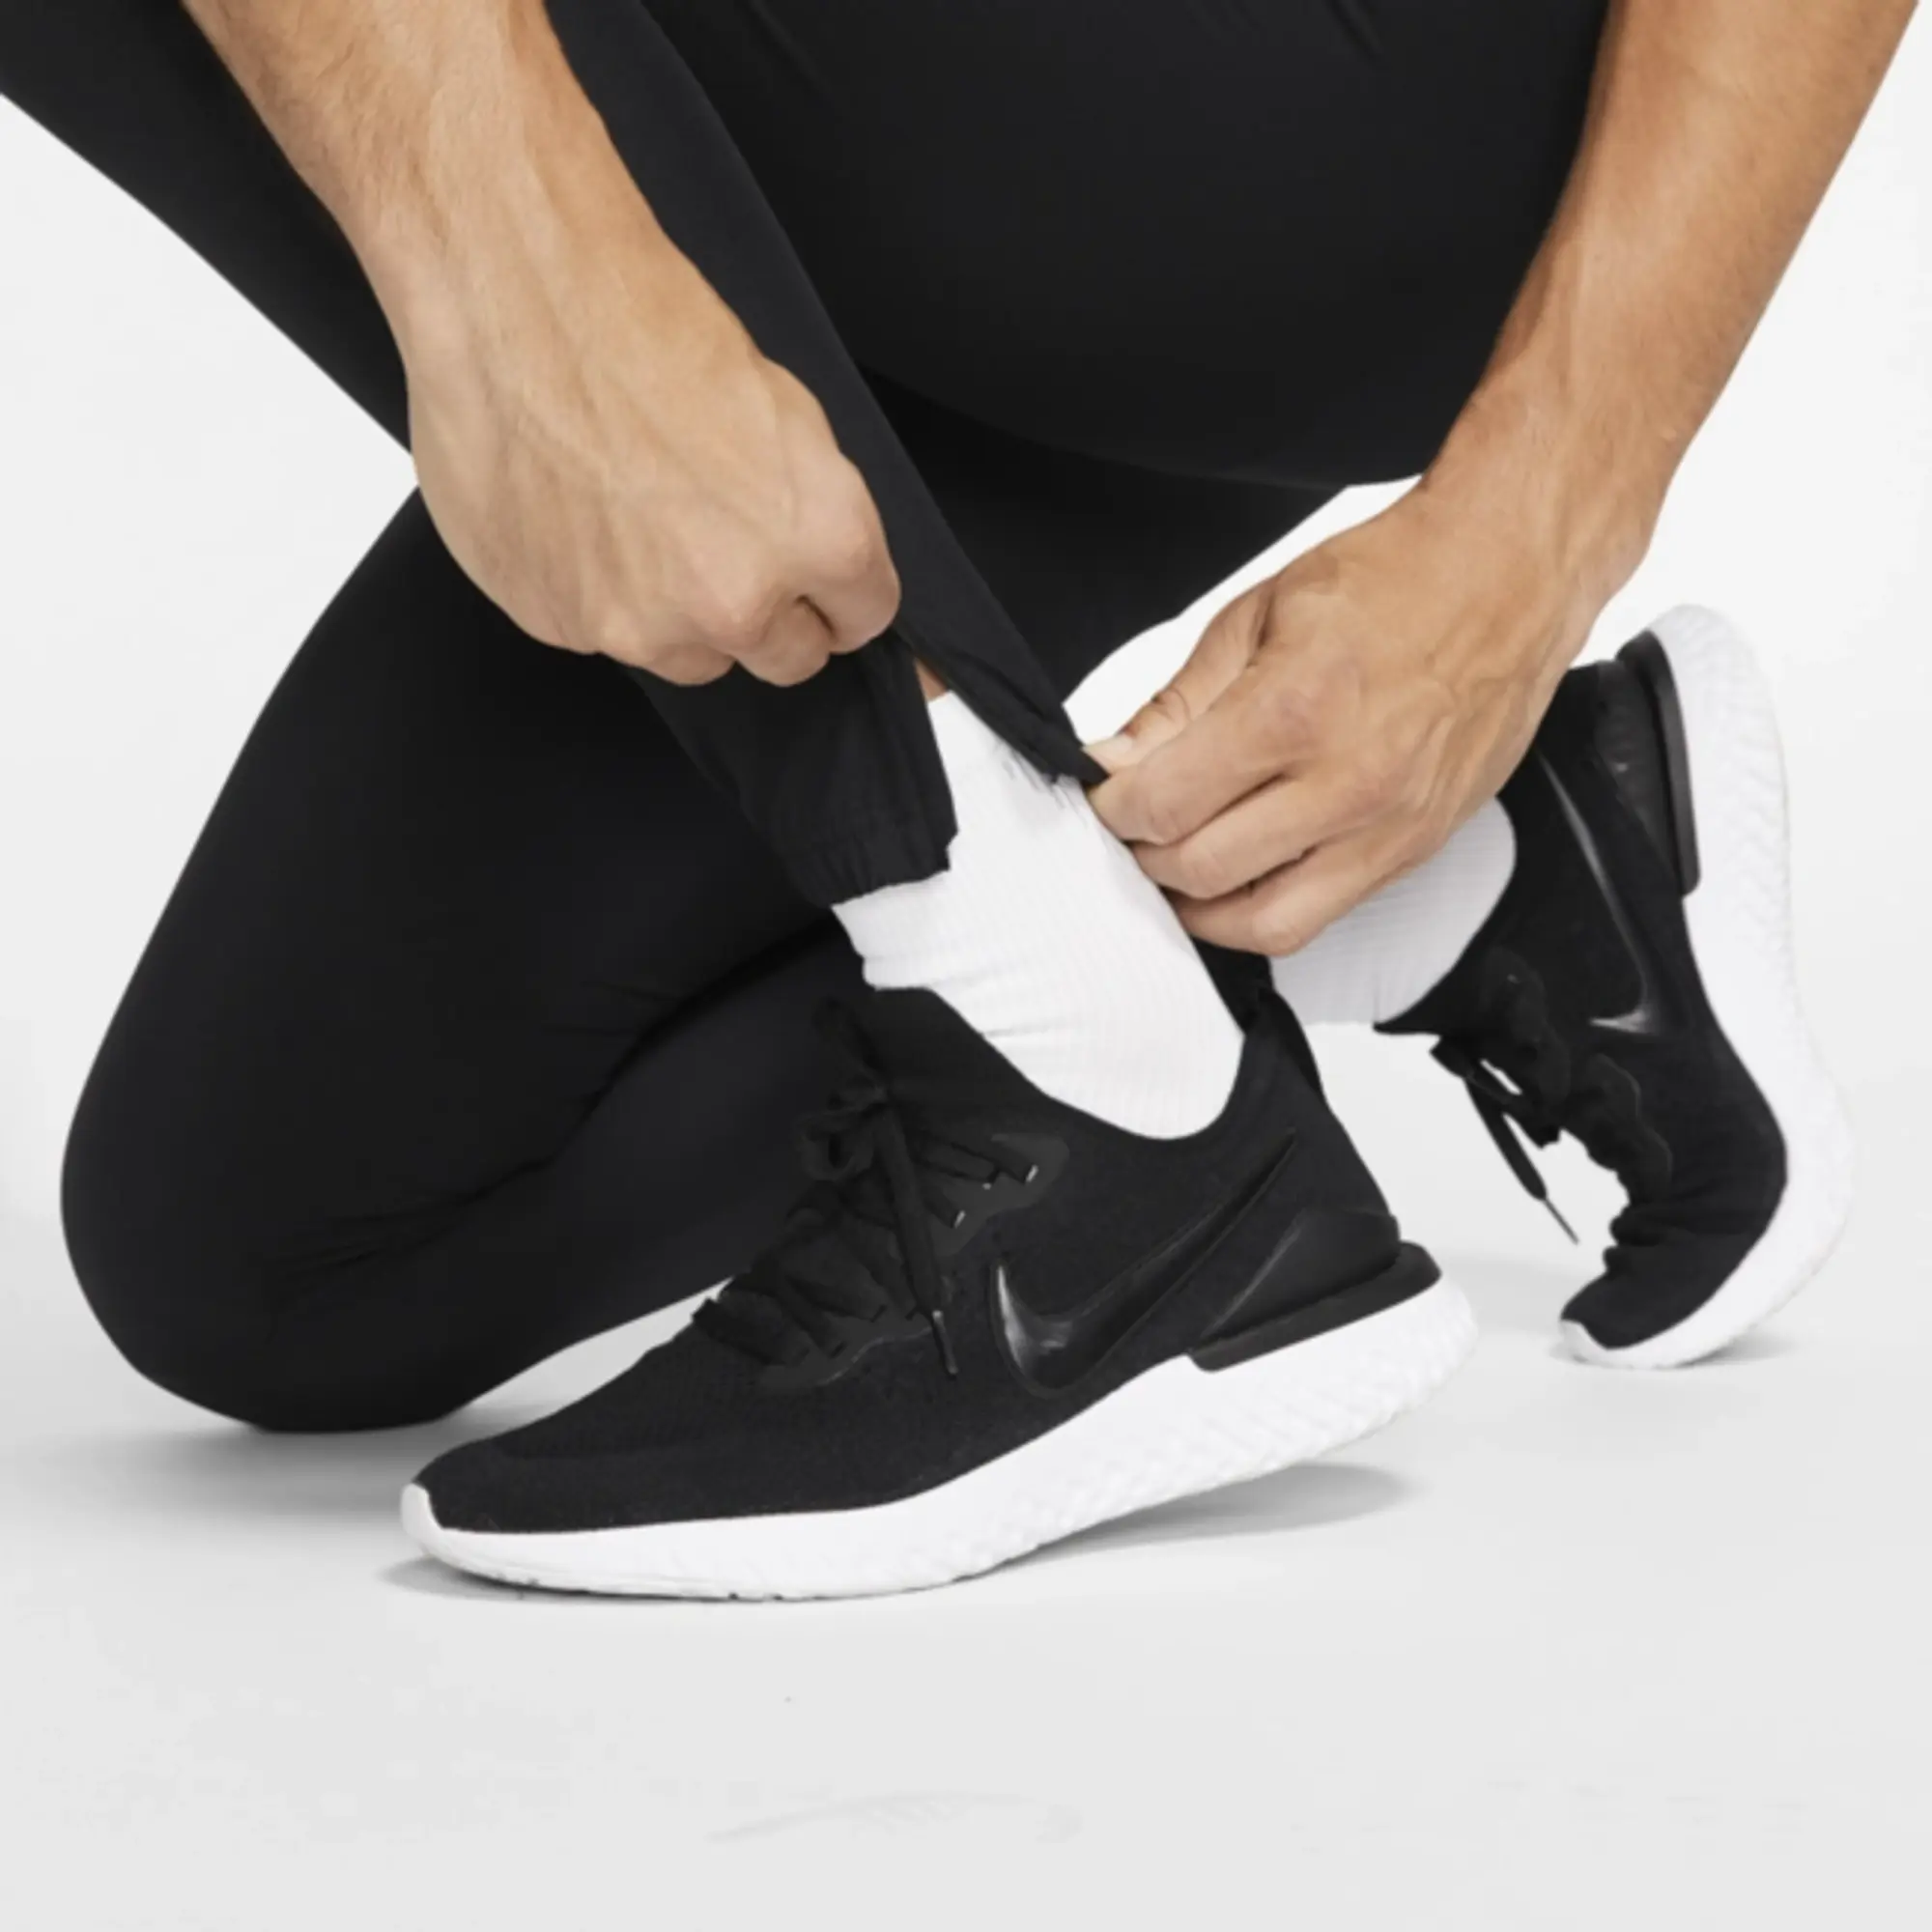 Nike Essential Men's Woven Running Trousers - Black | BV4833-010 ...